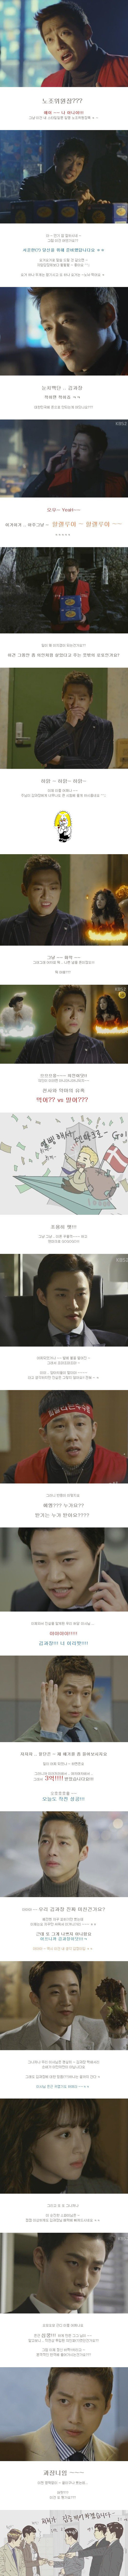 episode 6 captures for the Korean drama 'Chief Kim'